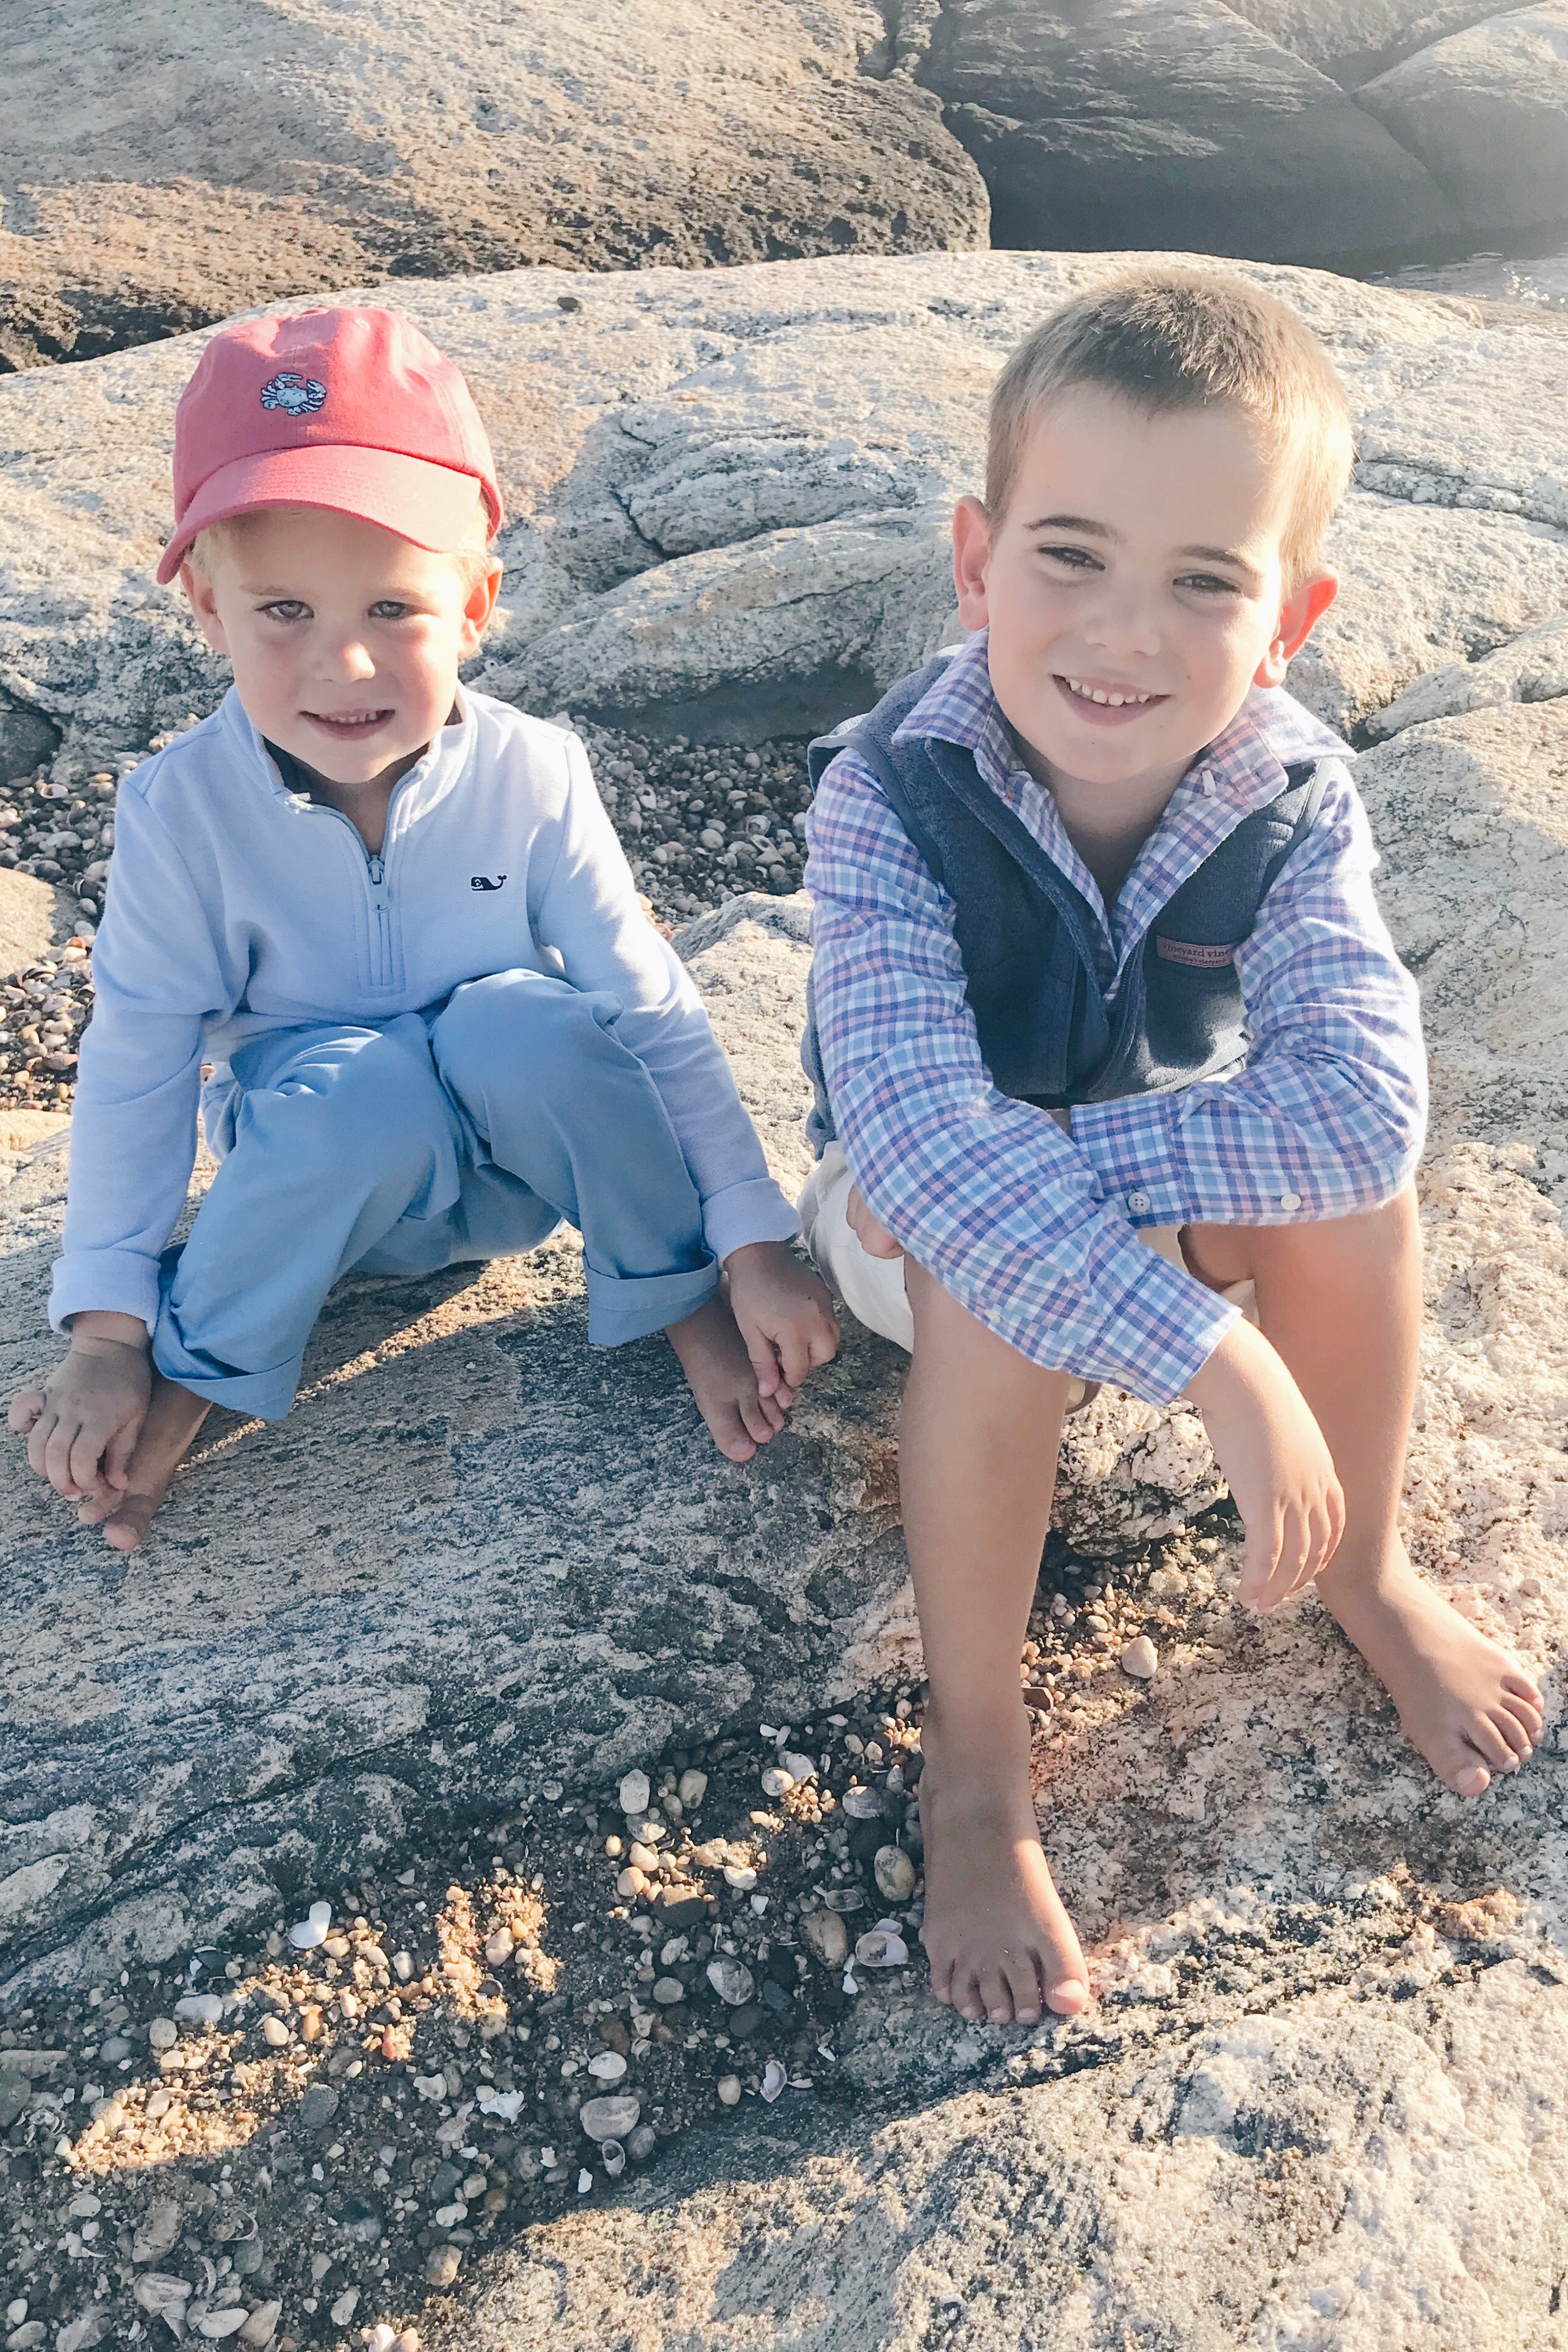 Vineyard Vines Boy Outfits - Connecticut Lifestyle Bloggger Pinteresting Plans sons